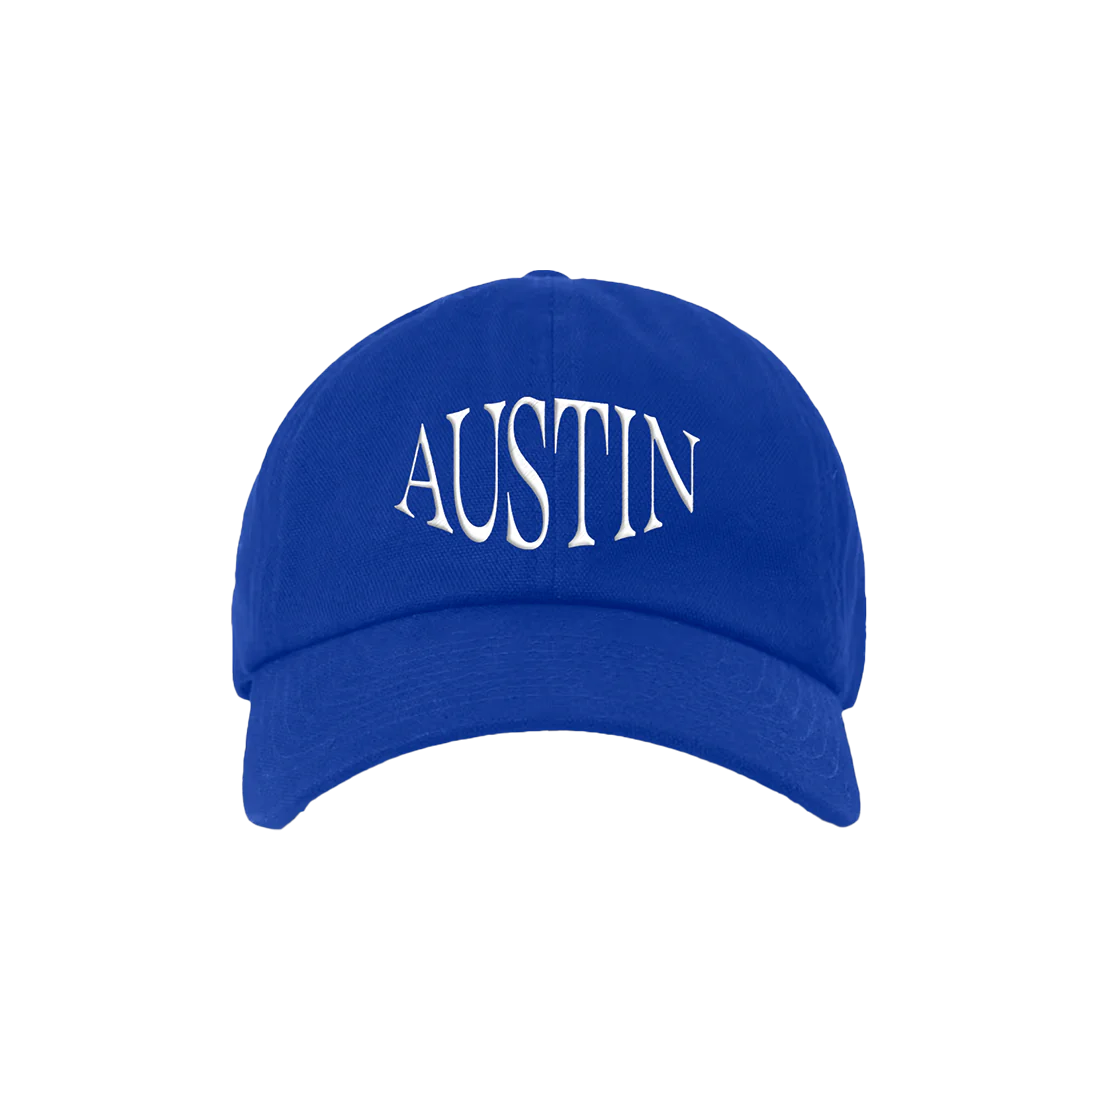 Post Malone - Austin Hat